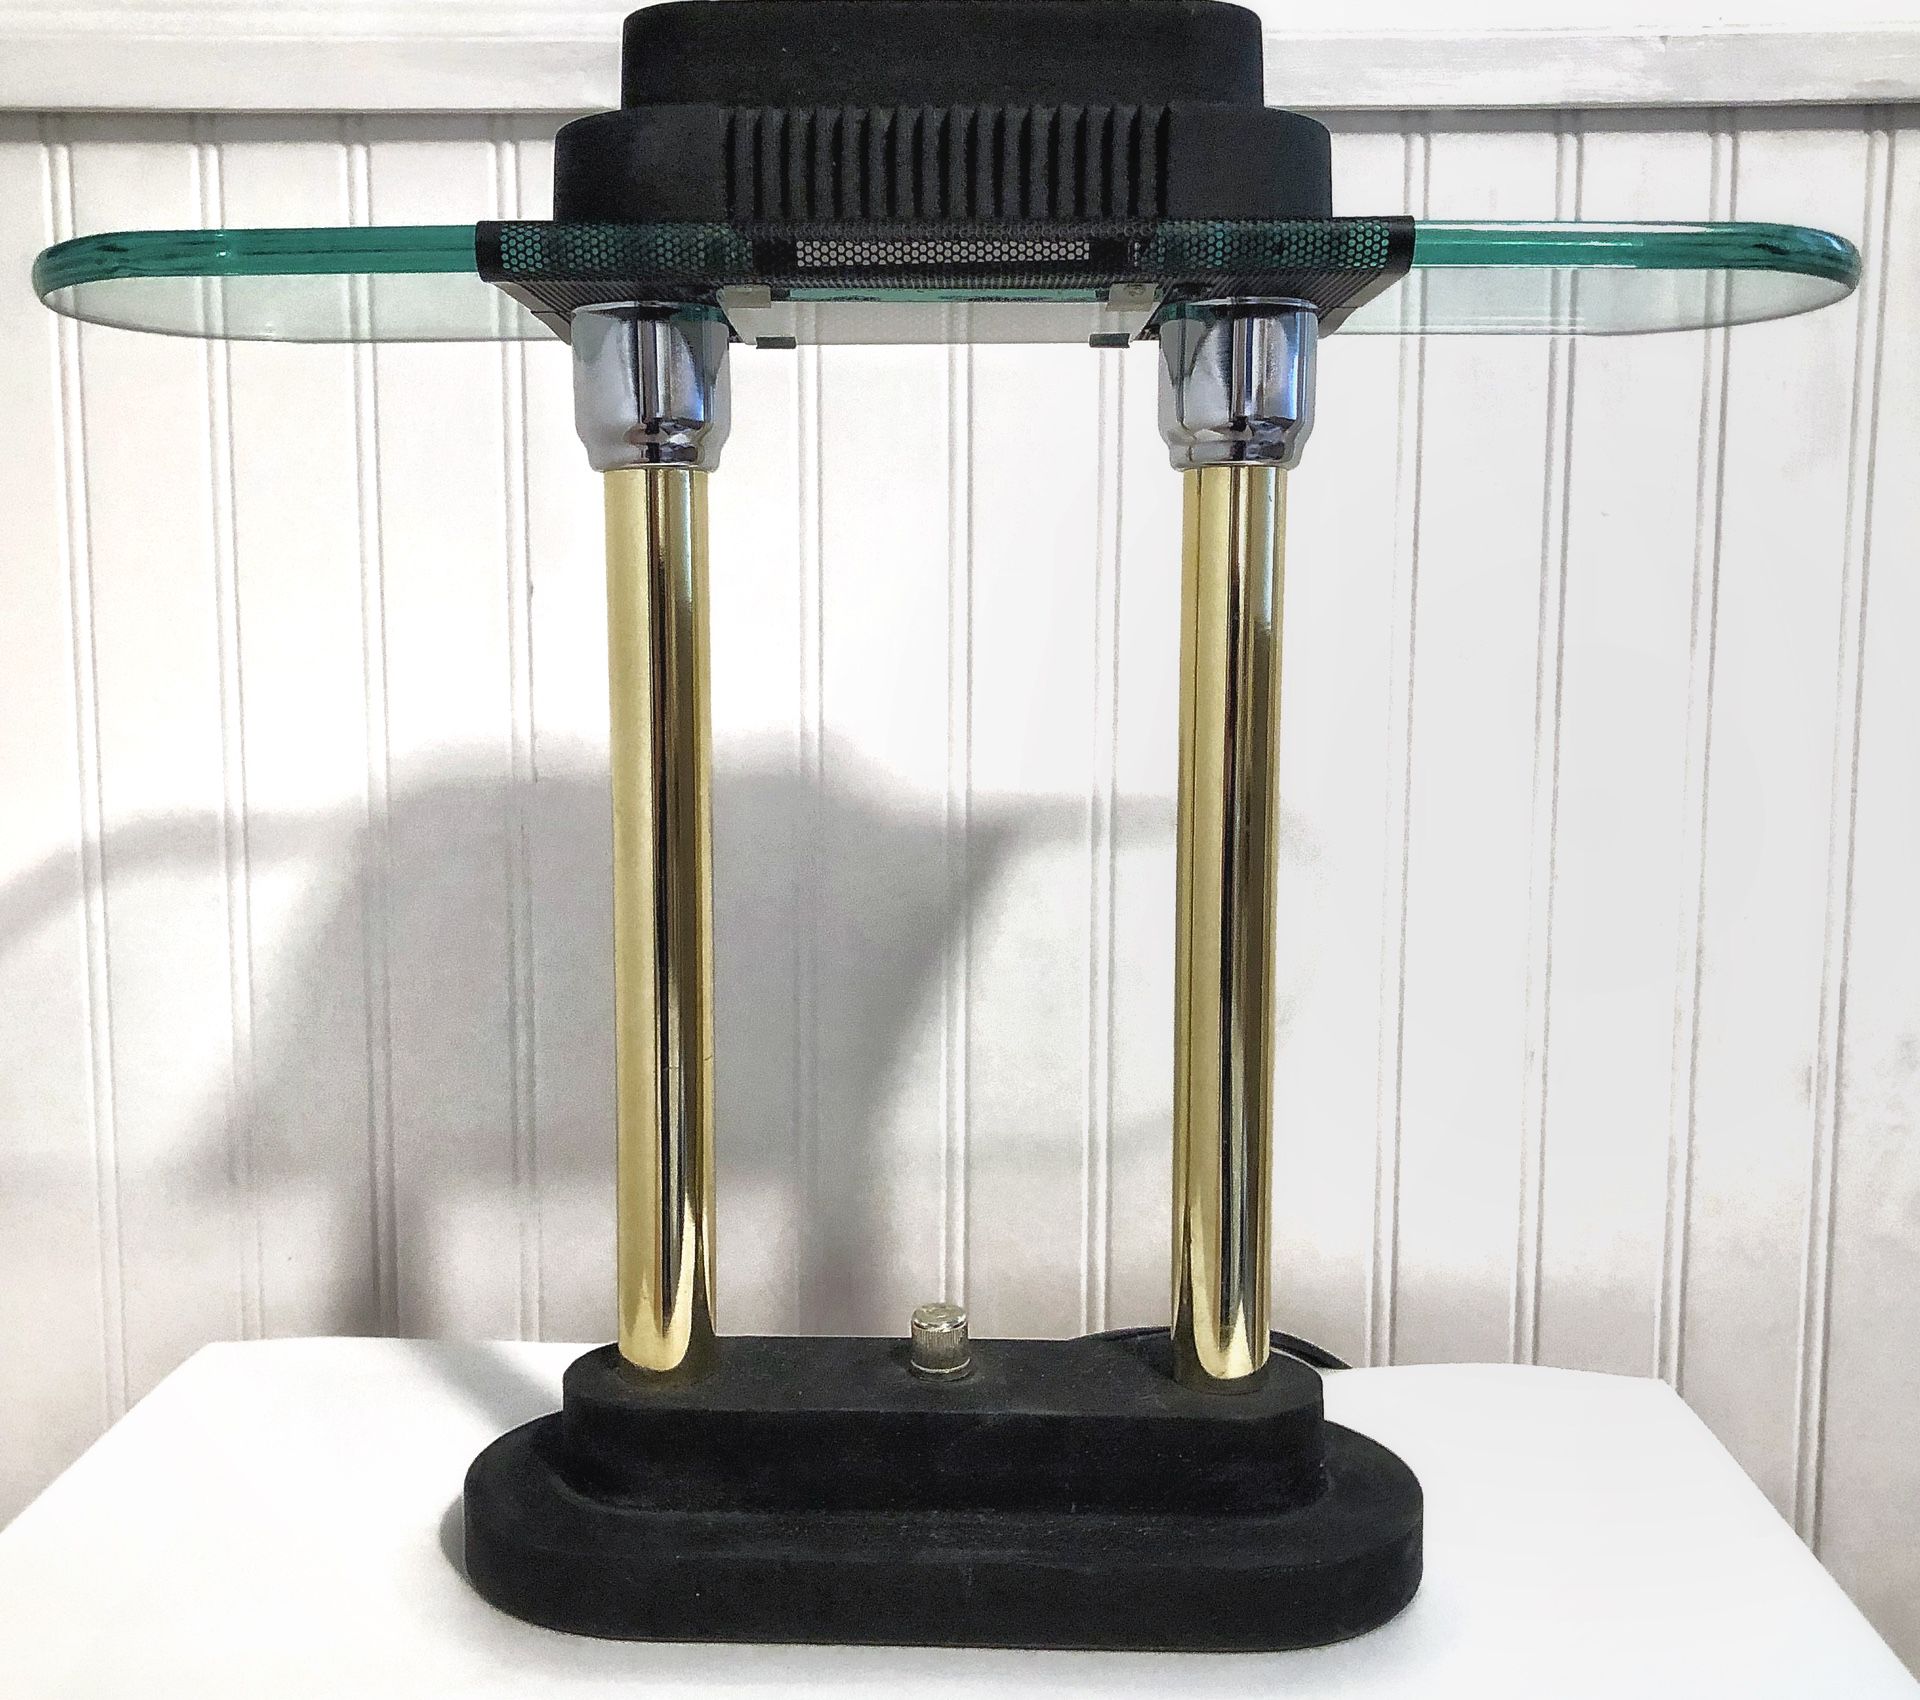 Halogen Desk Lamp Like New Condition